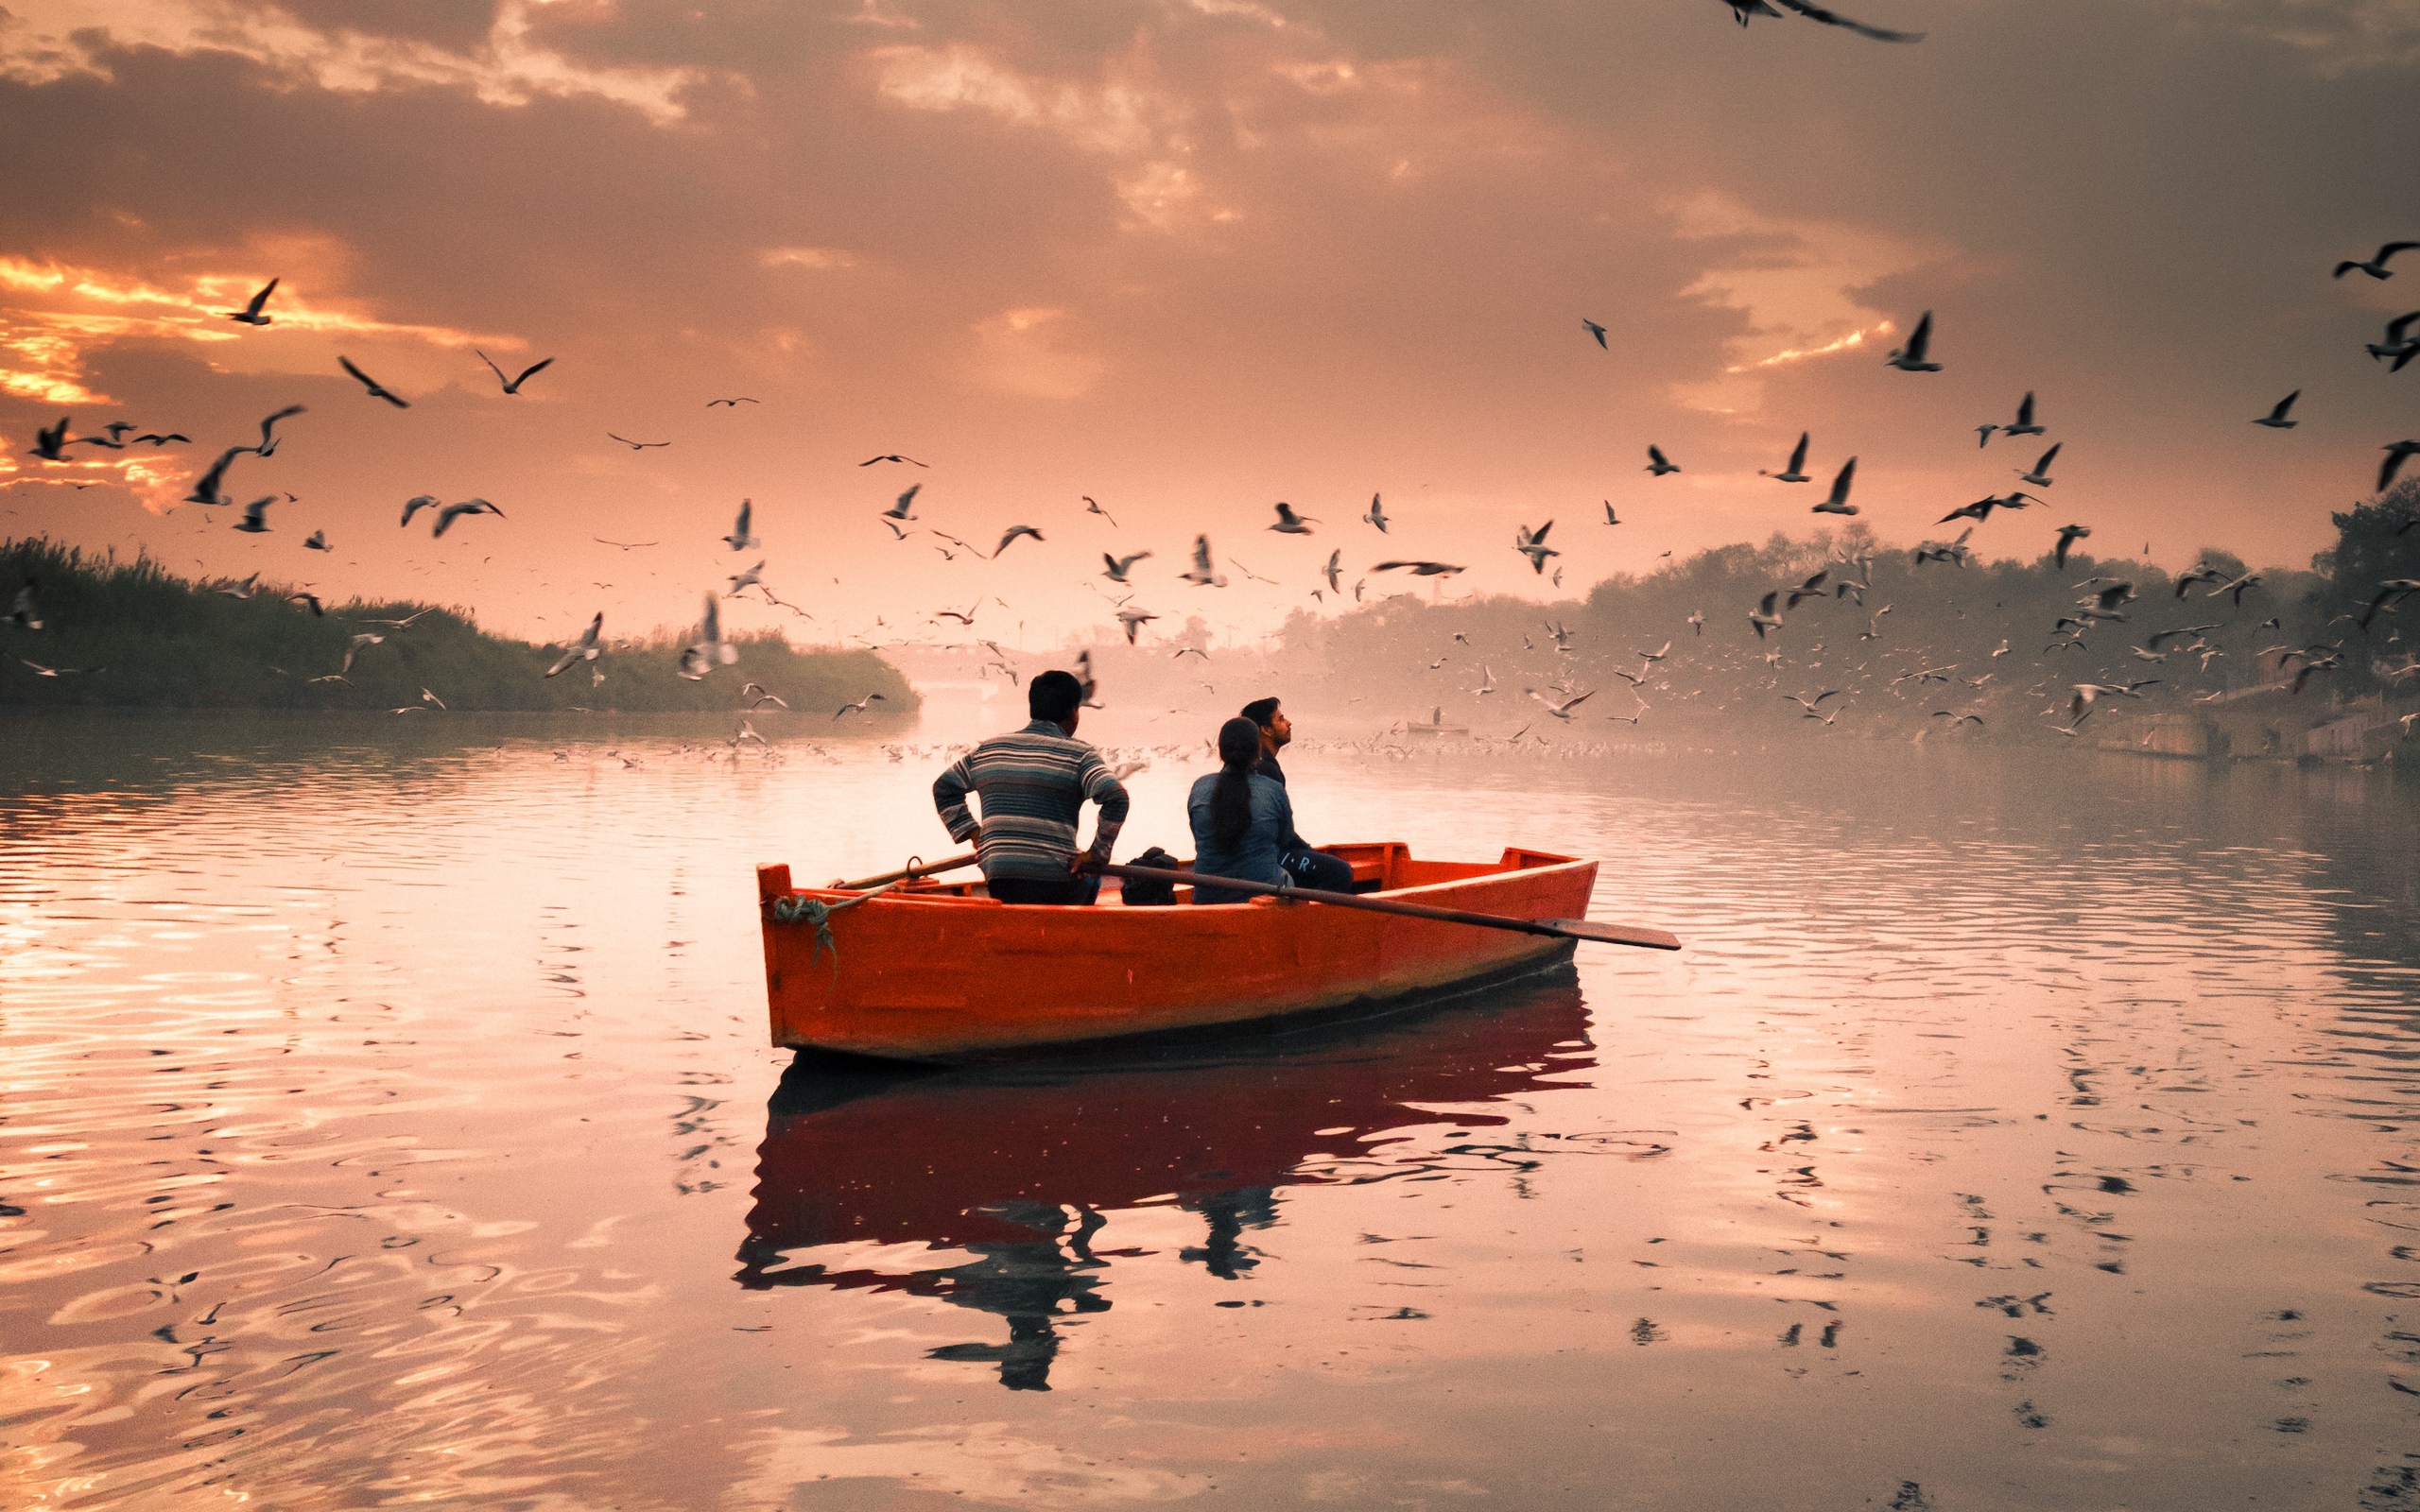 Двое подошли к реке лодка. Лодка на реке. Человек в лодке. Фотосессия в лодке. Человек в лодке на озере.